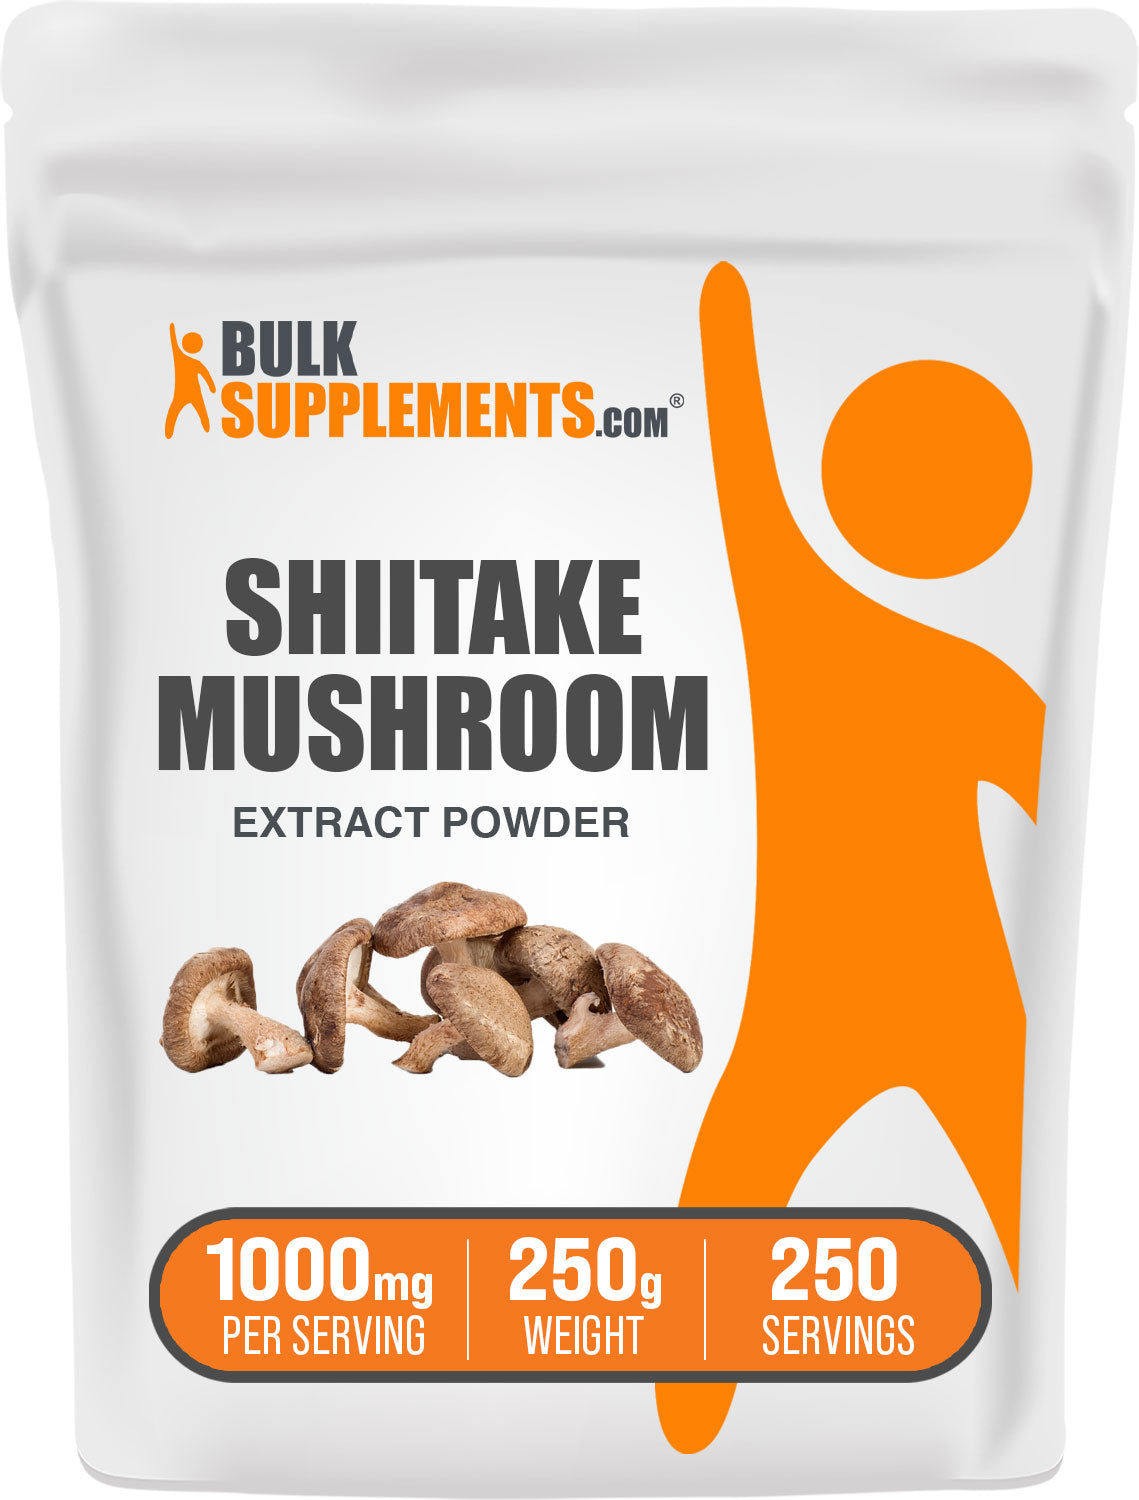 BulkSupplements.com Shiitake Mushroom Extract Powder 250g Bag